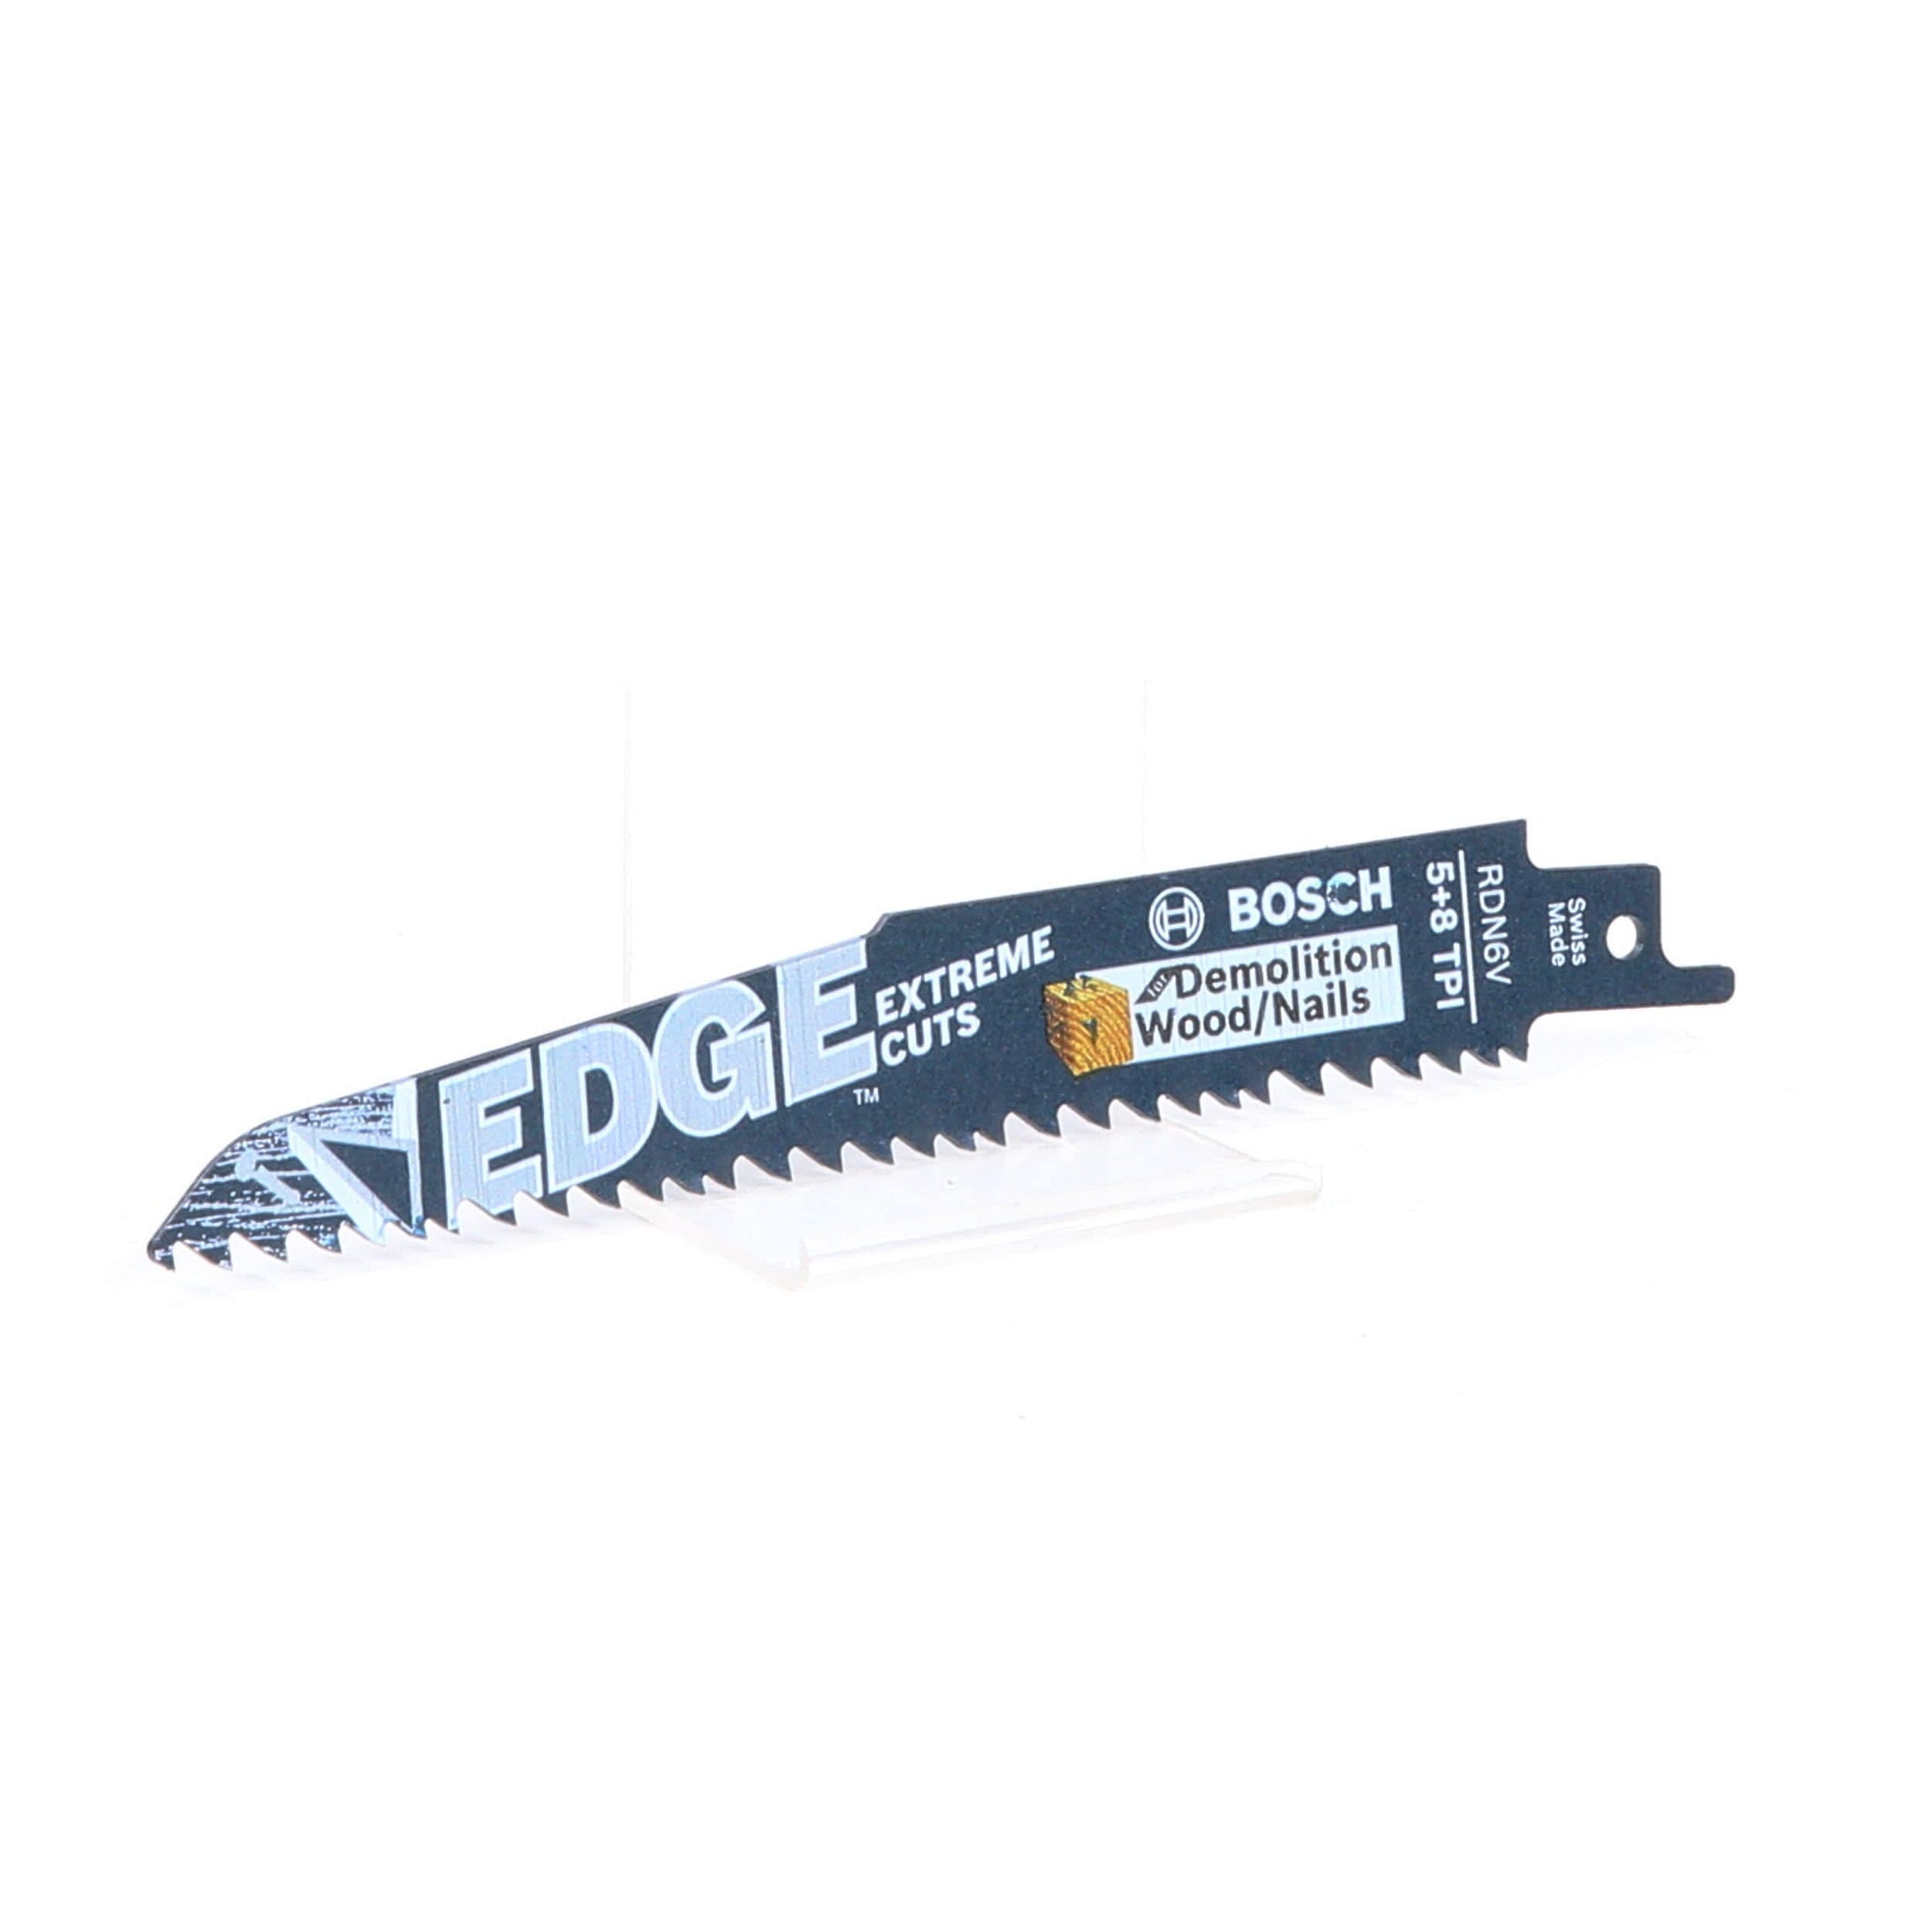 New Bosch REDM6X2 10 pack 6" 8-10 TPI Edge Blade for Metal Demolition $2.00 ea. 